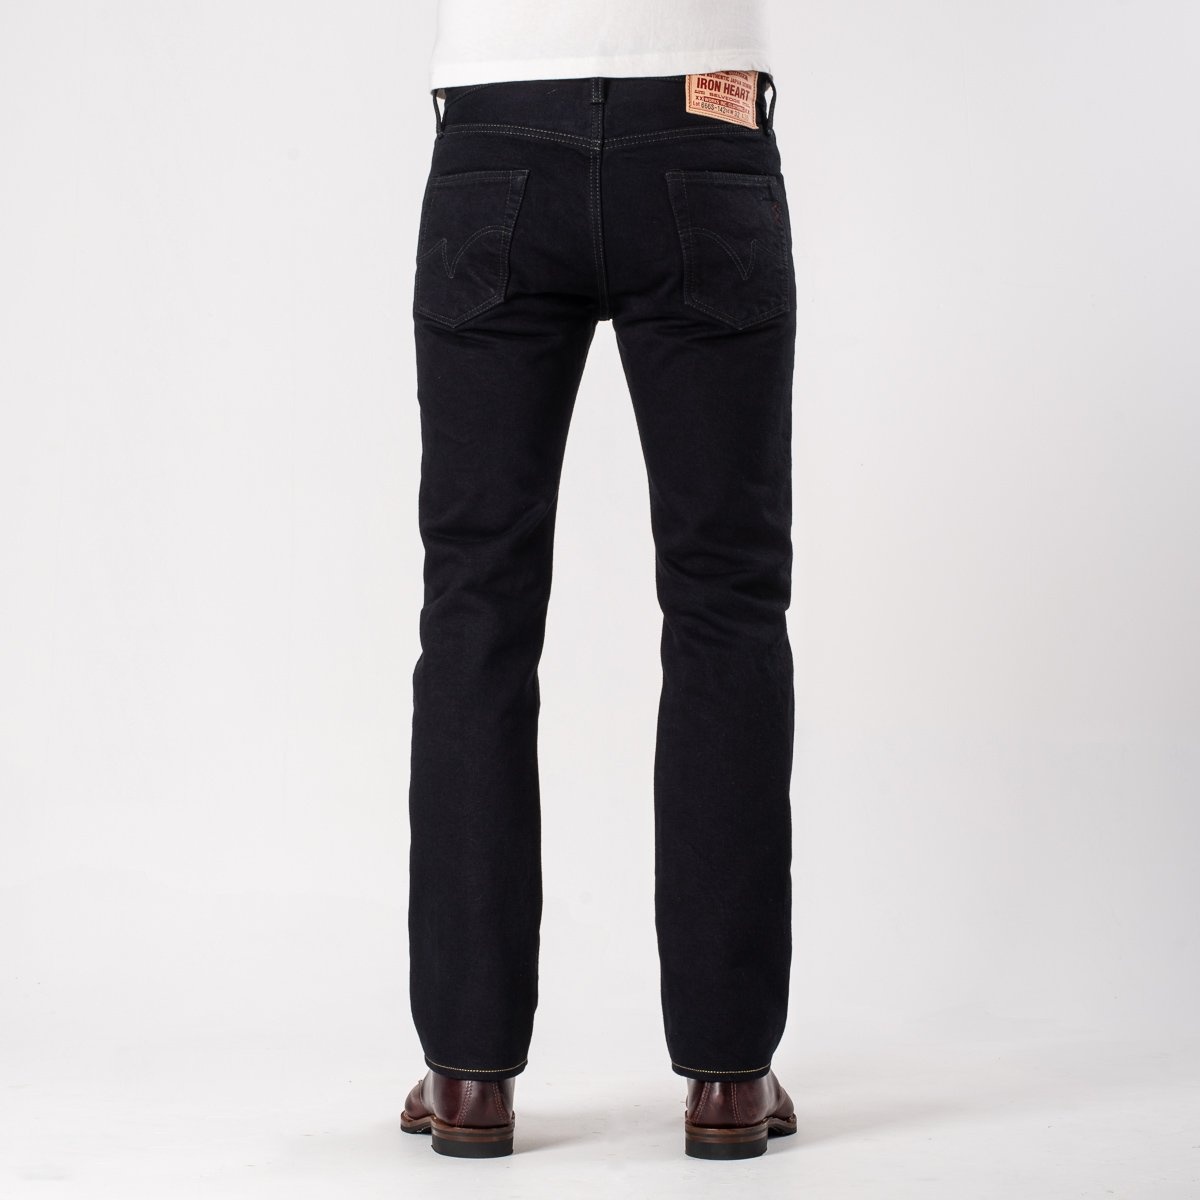 IH-666S-142od 14oz Selvedge Denim Slim Straight Cut Jeans - Indigo Overdyed Black - 3